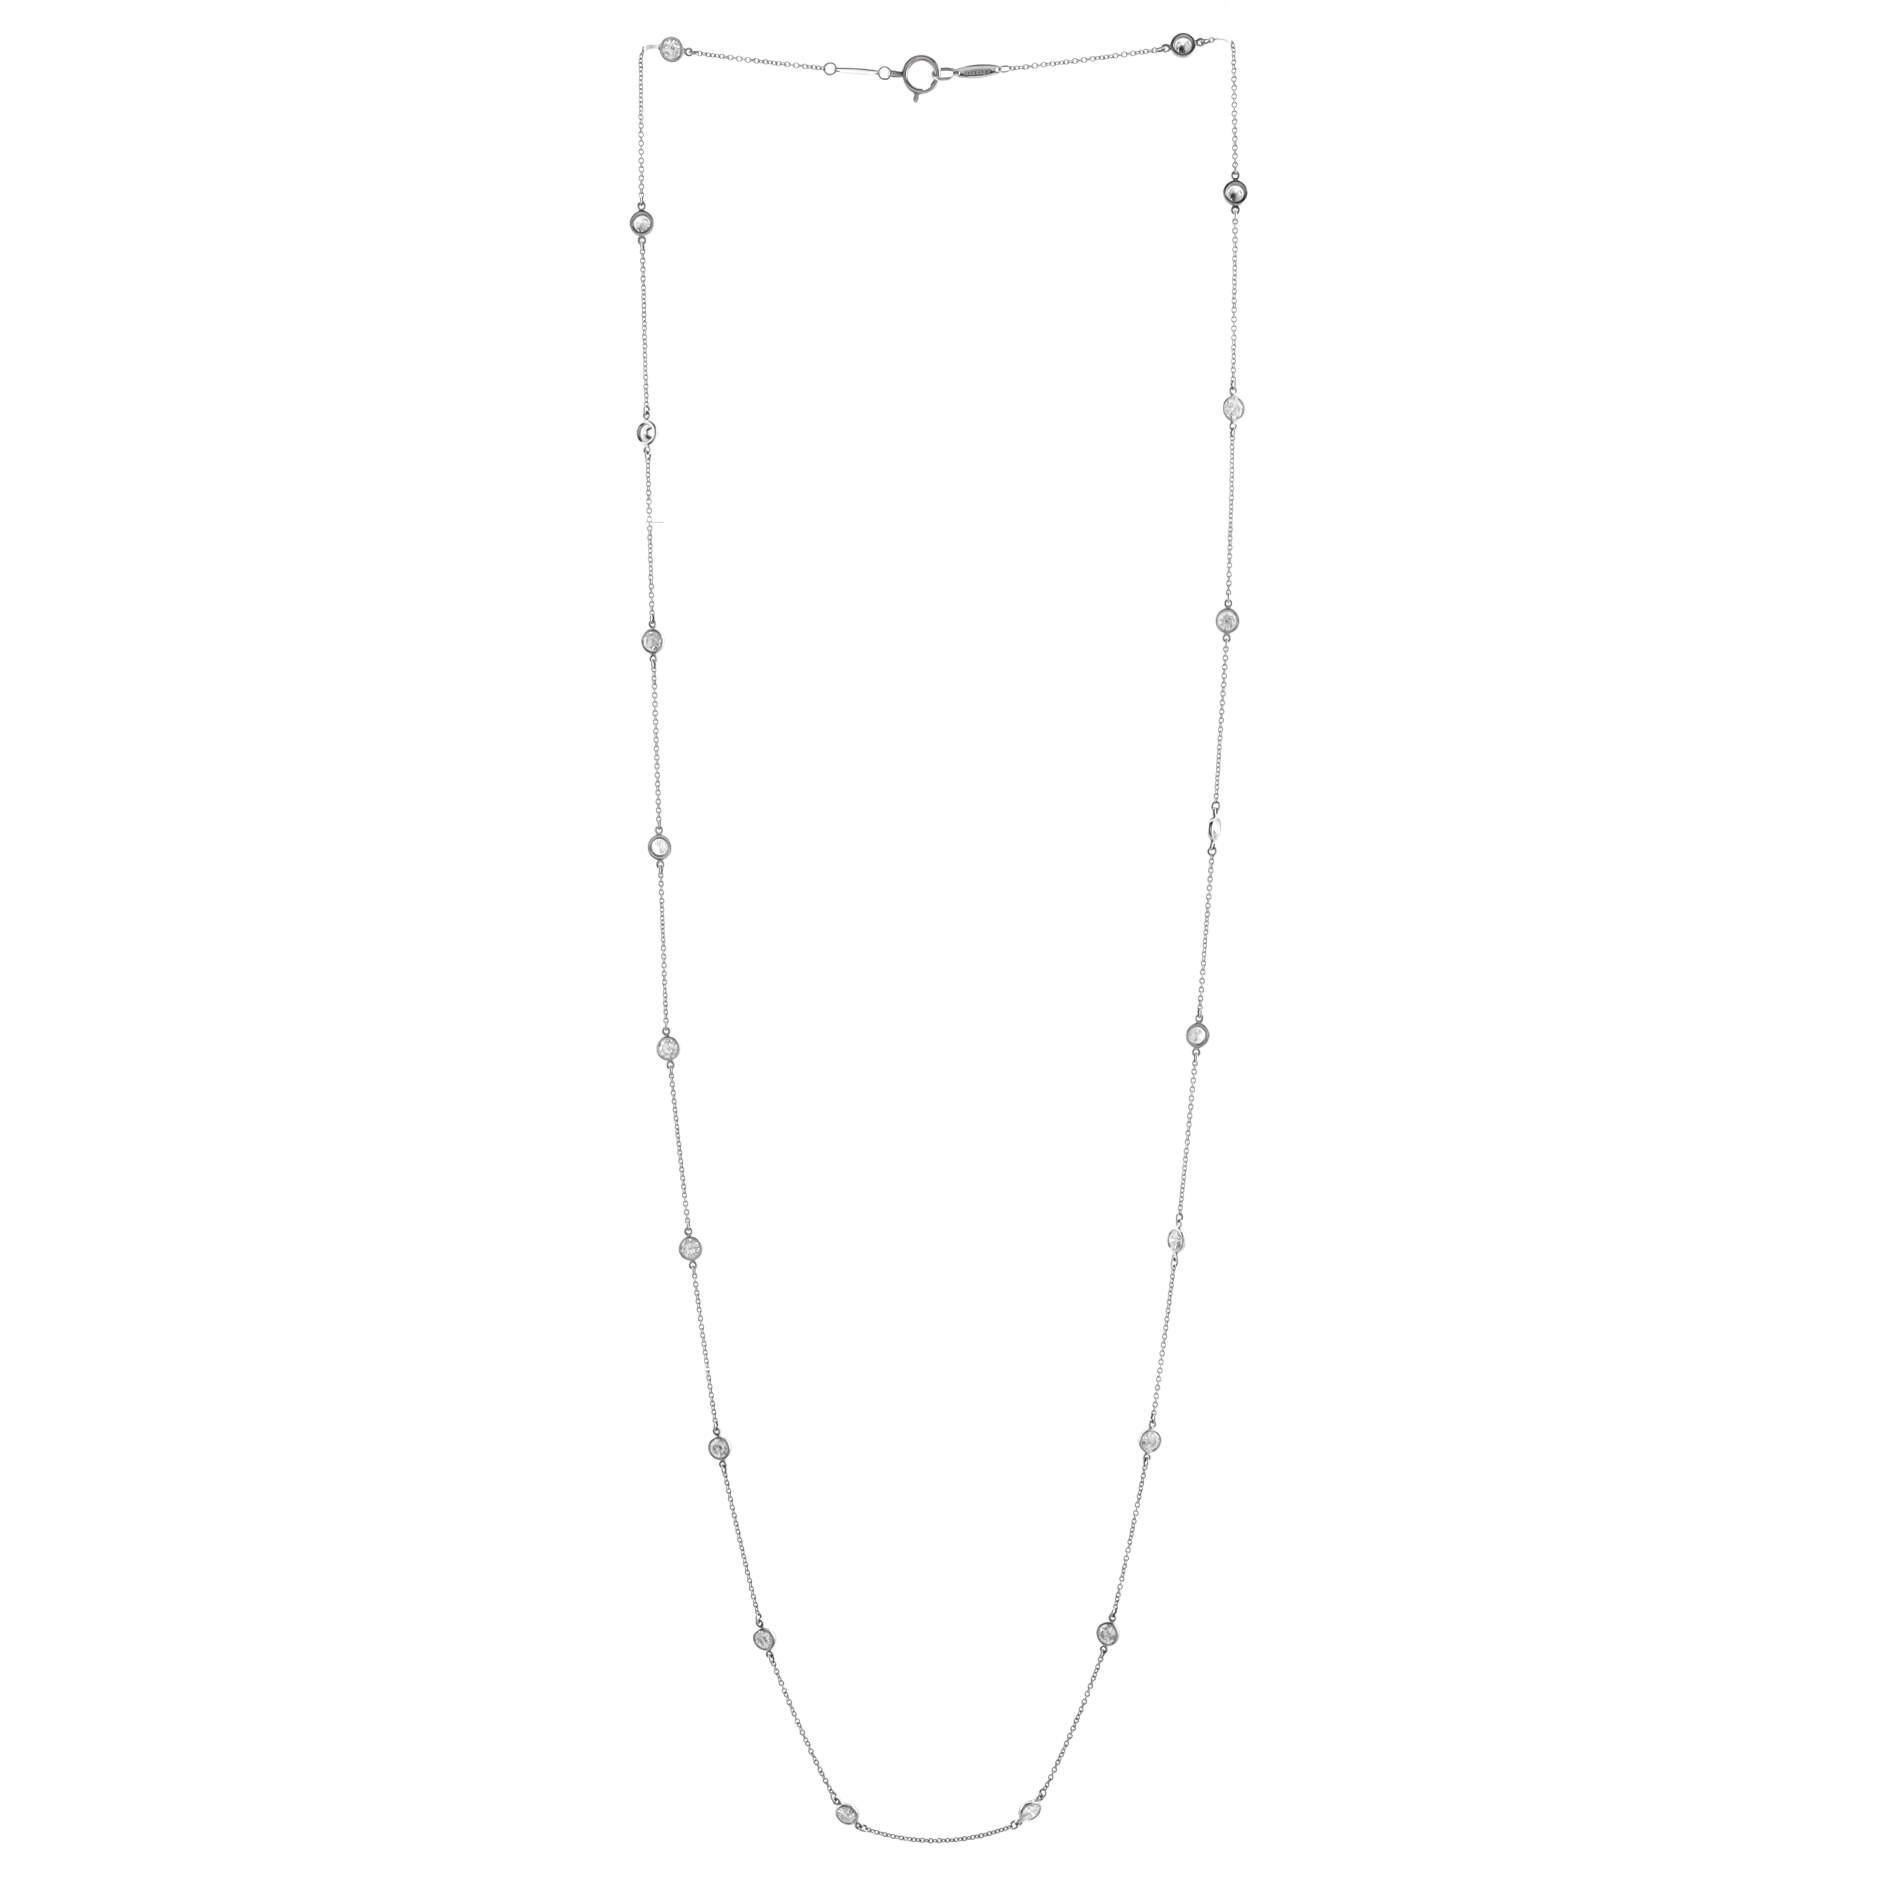 20 inch tiffany necklace